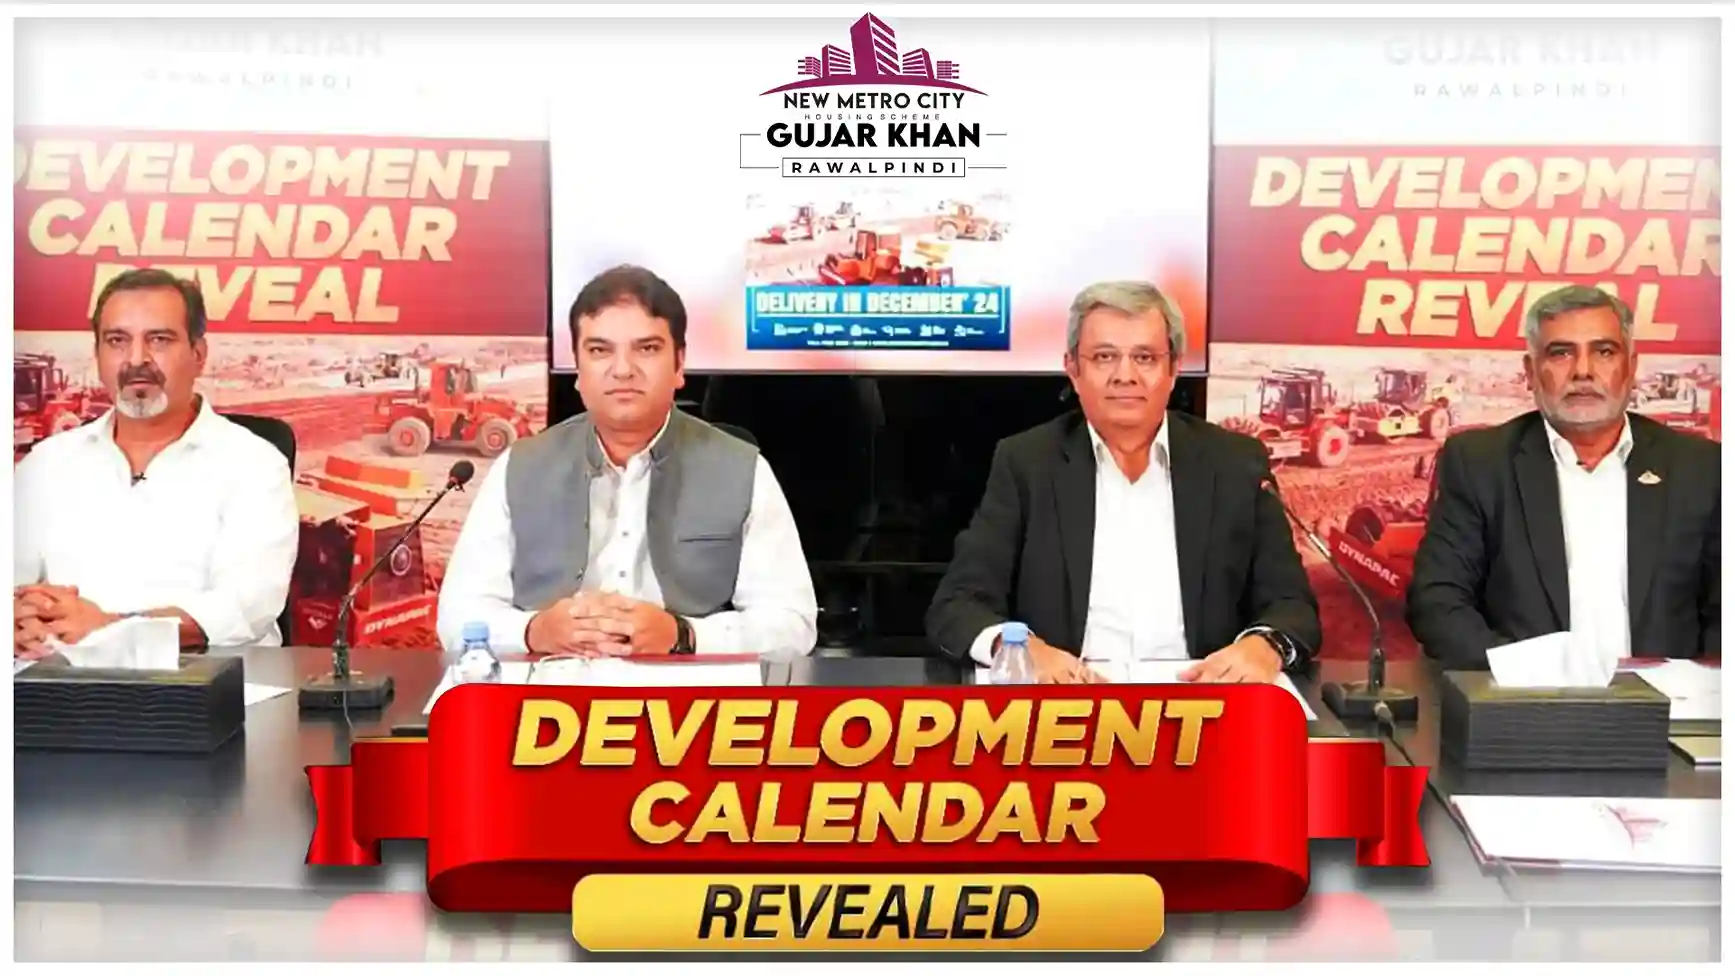 New Metro City Gujar Khan Development calender